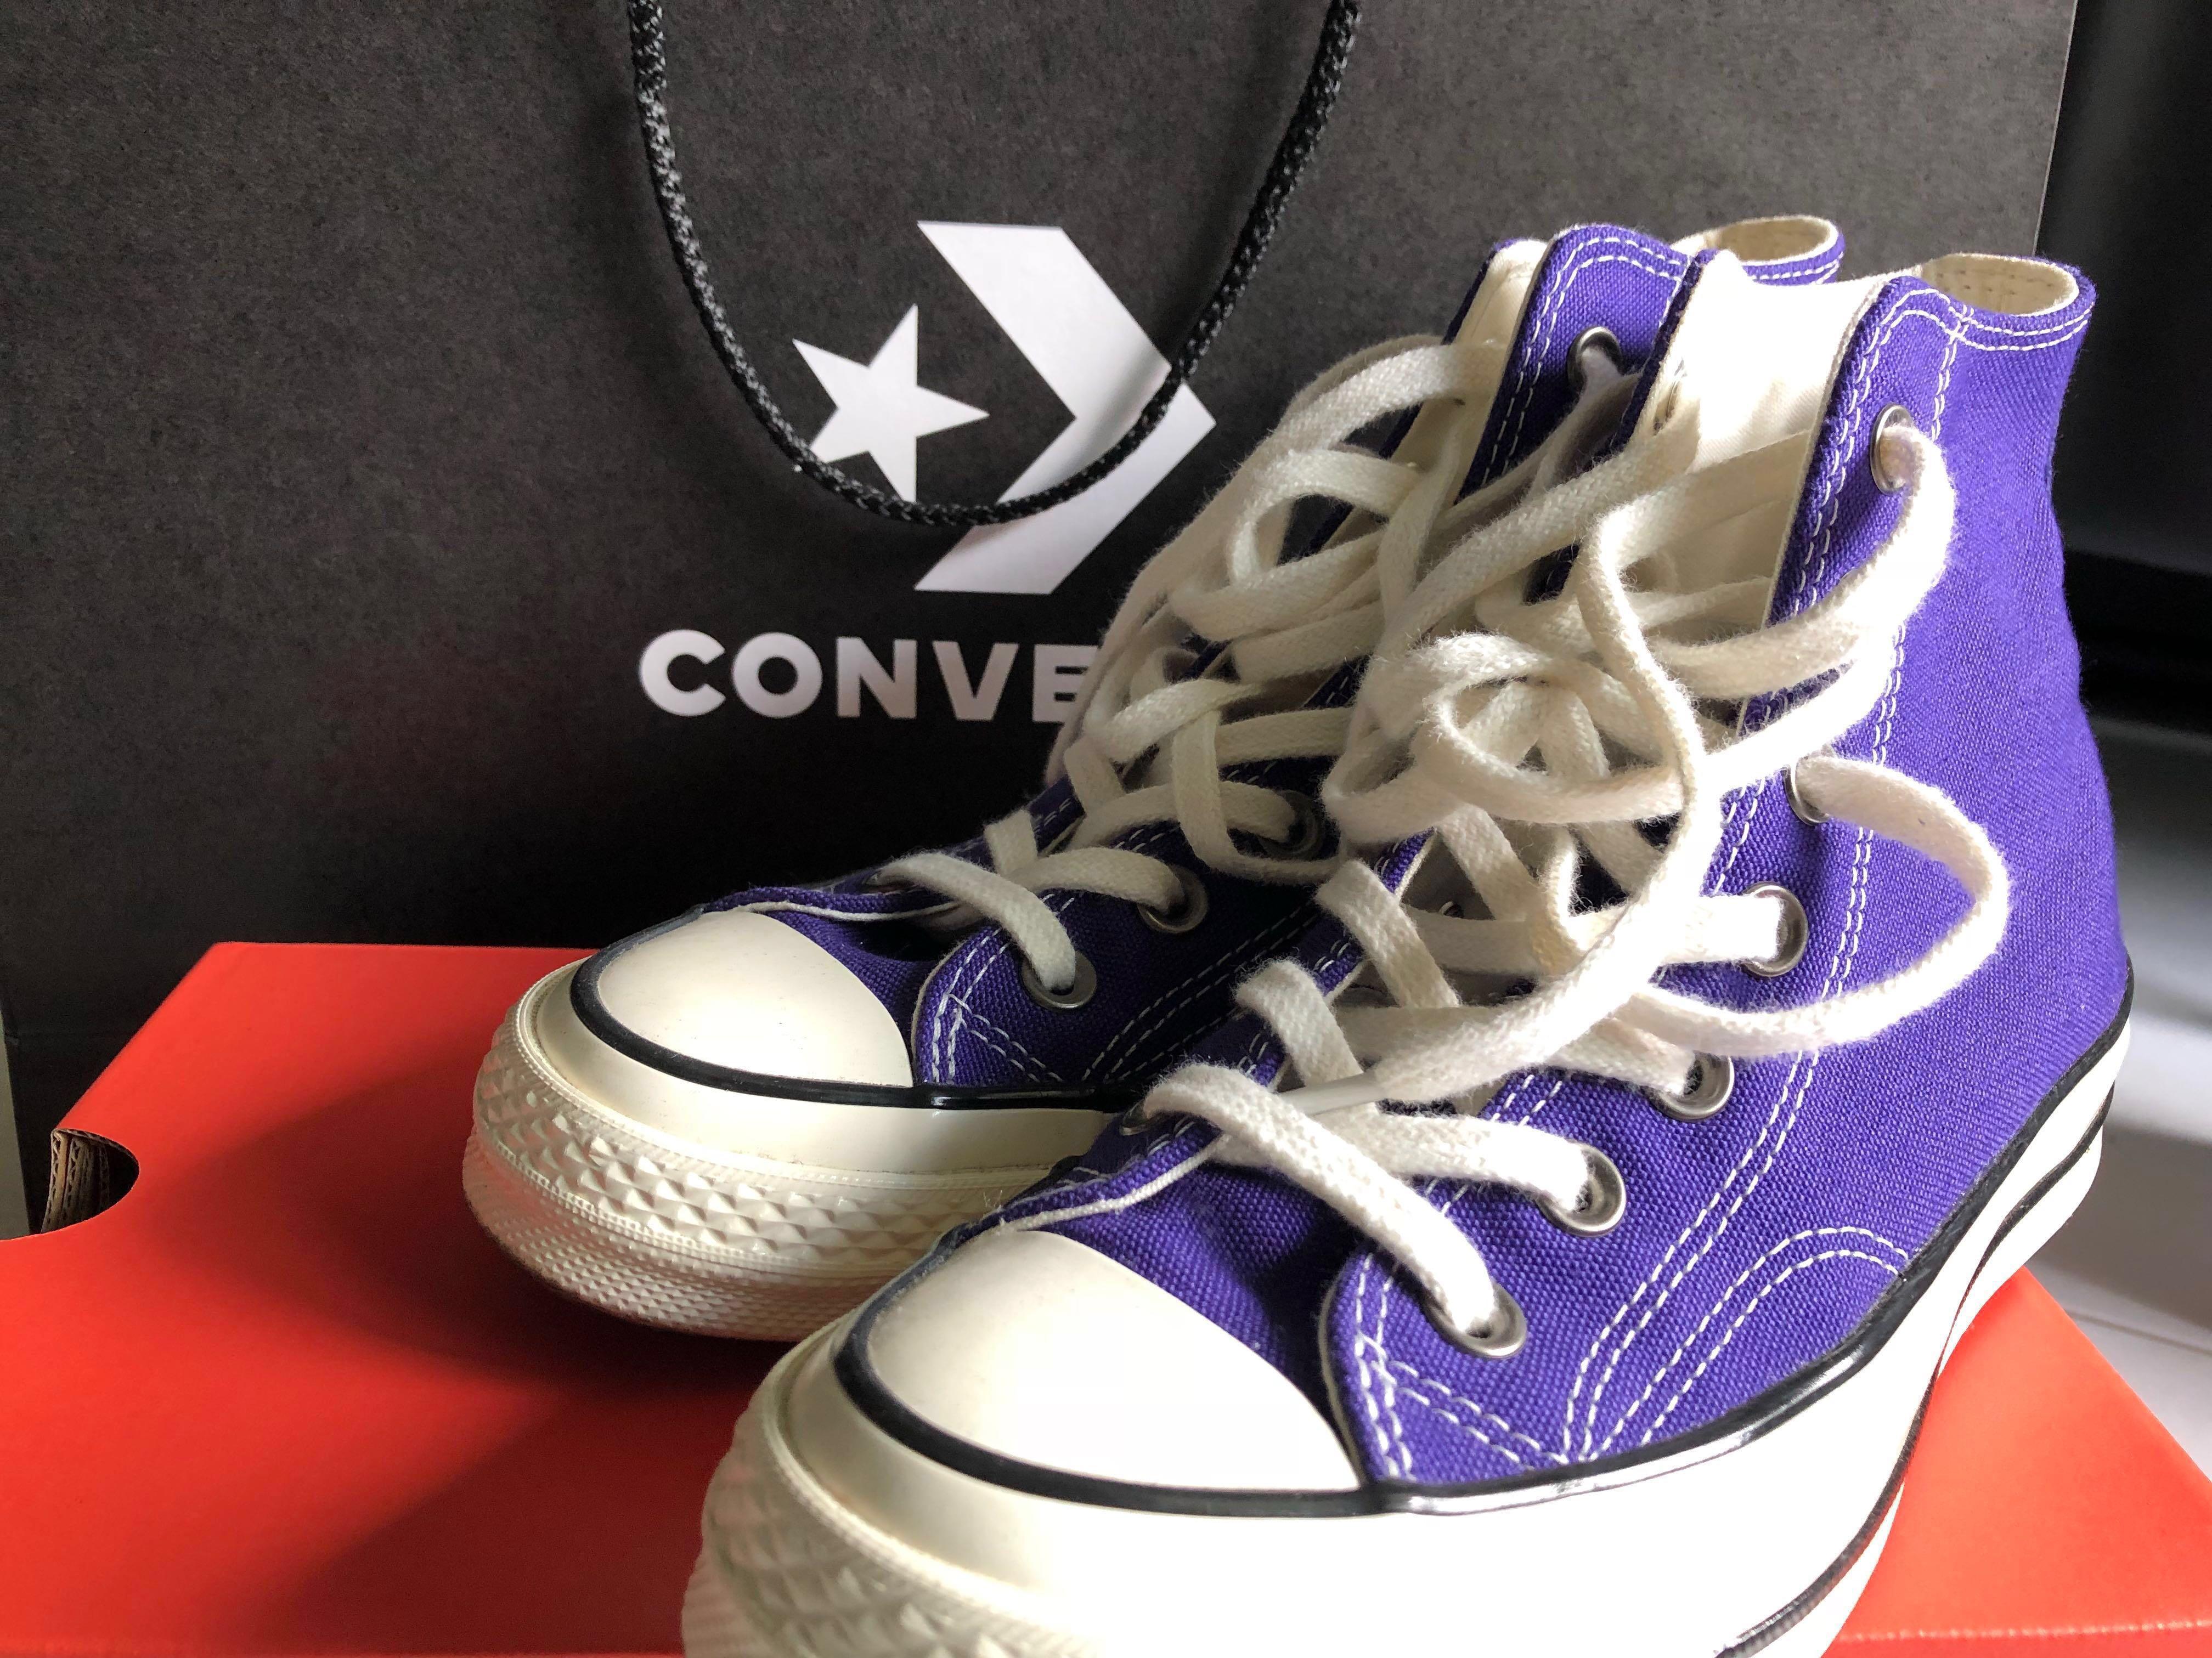 size 4 purple converse